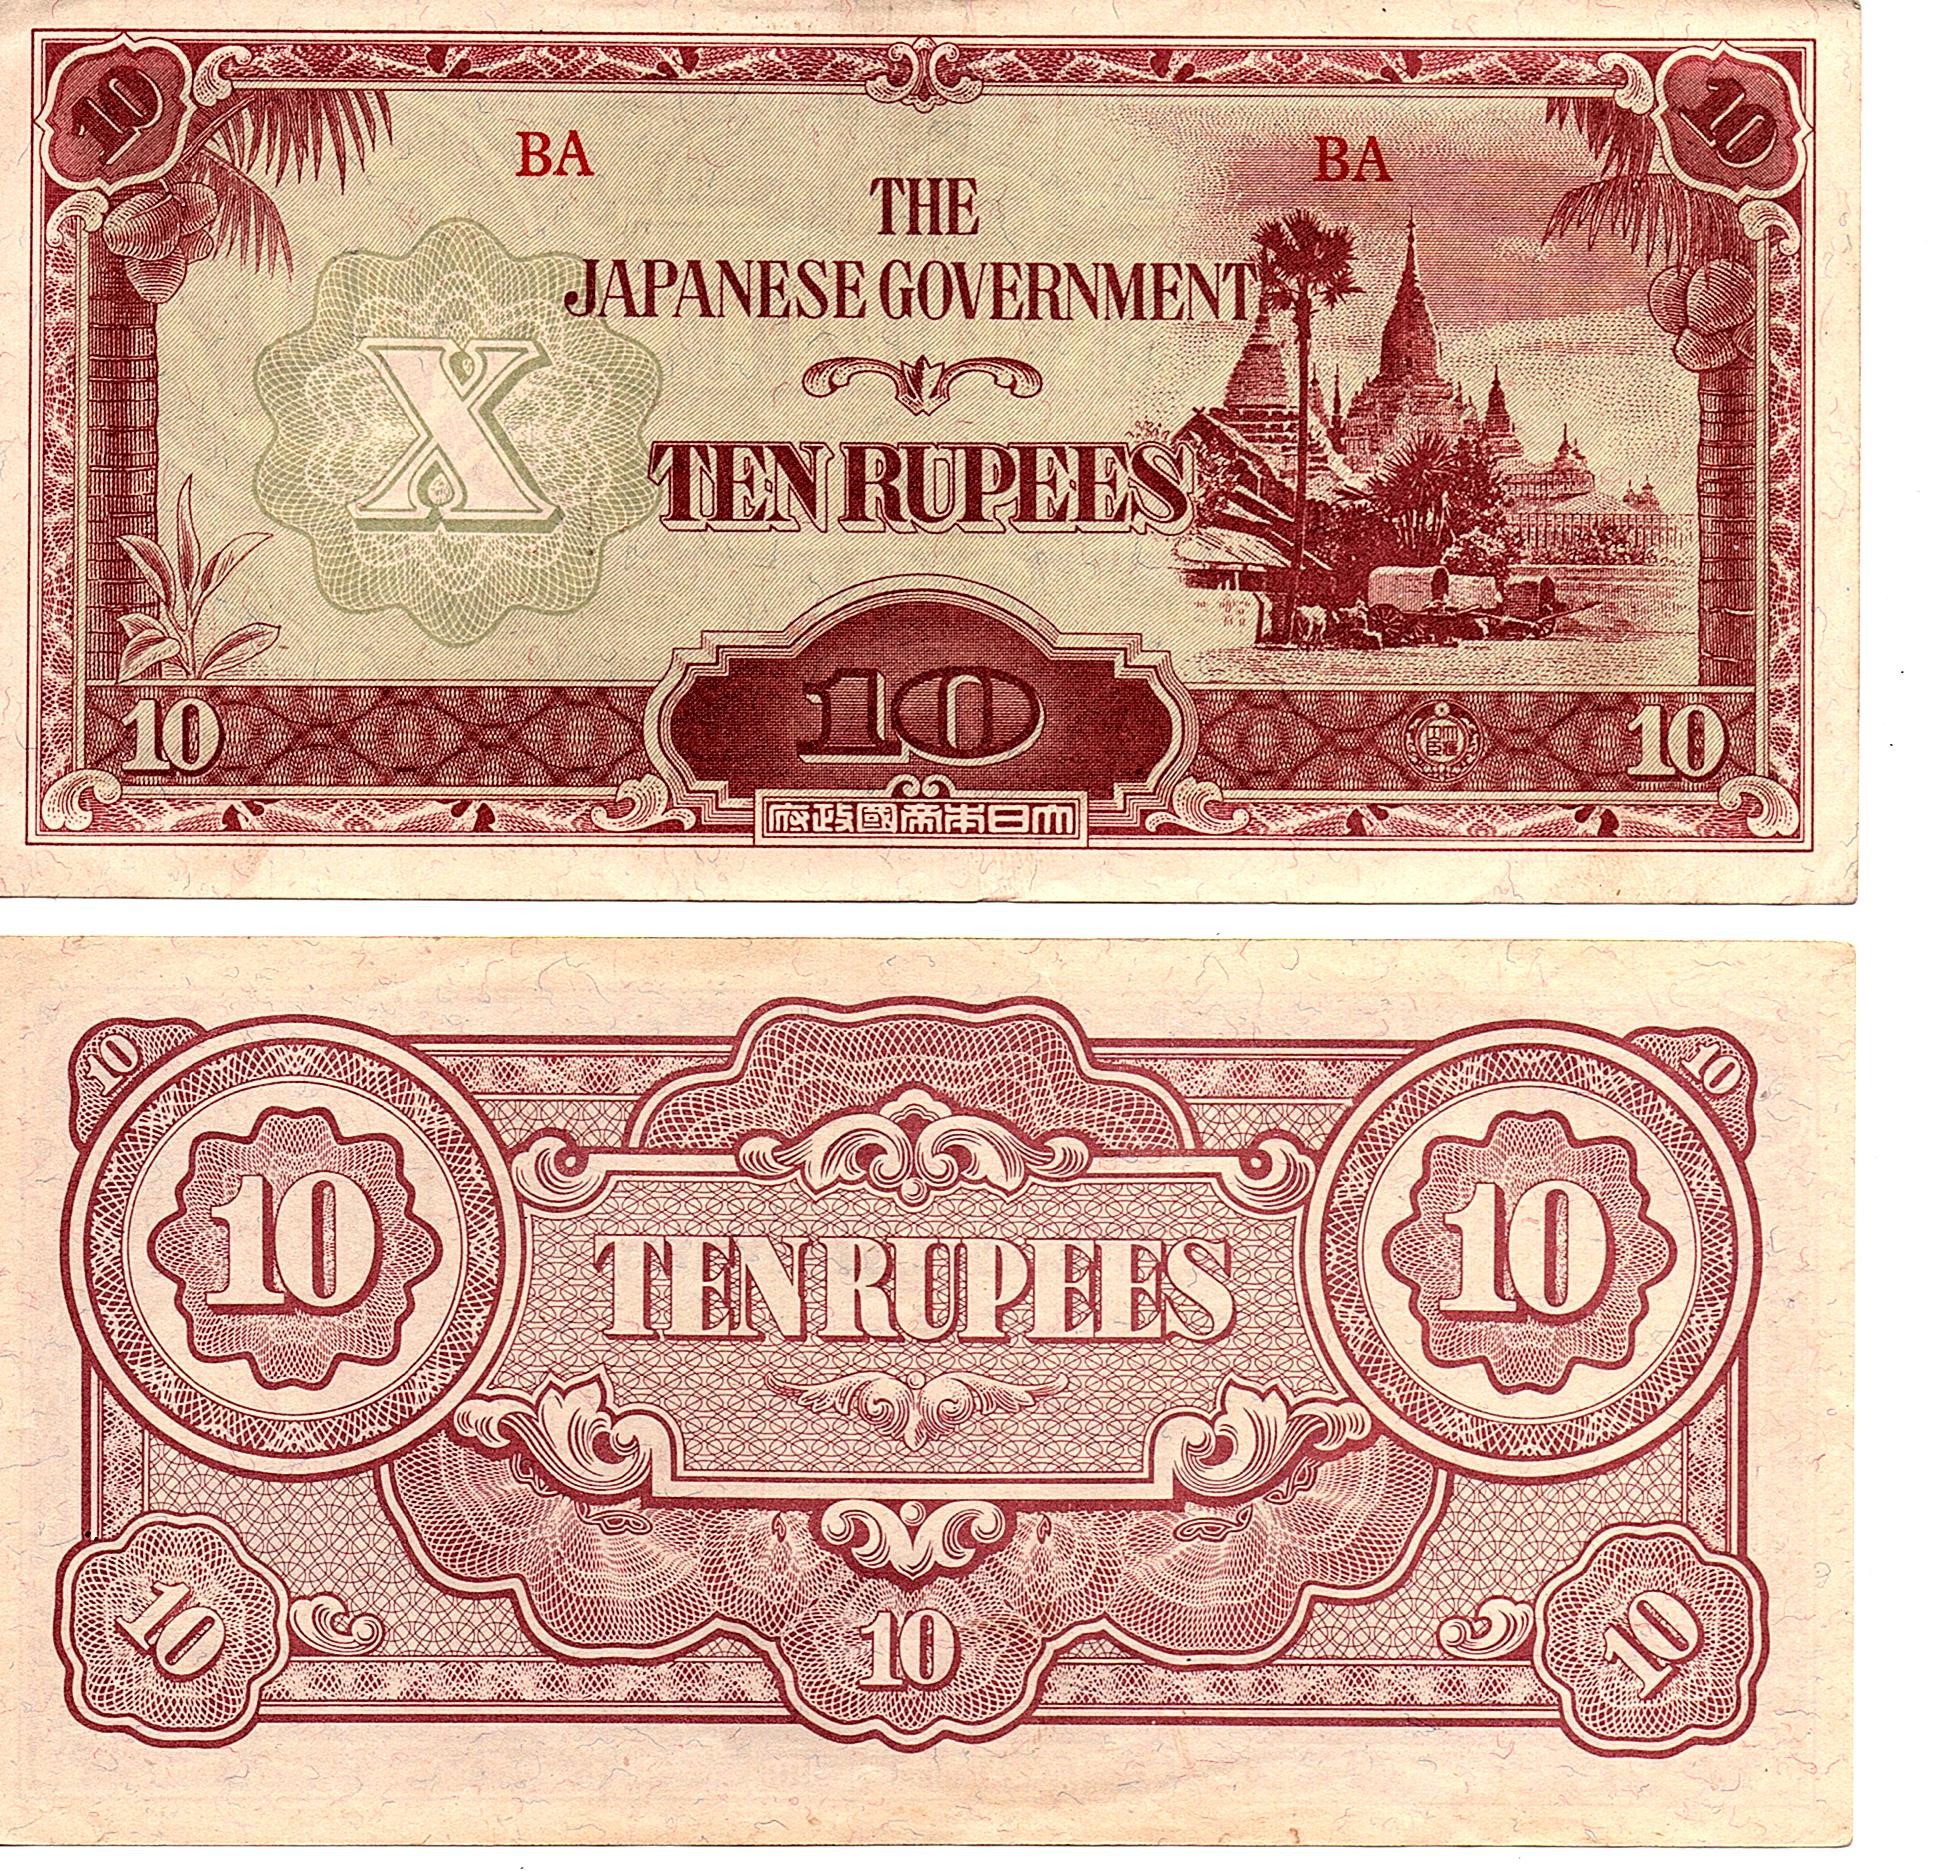 Burma #16/VF 10 Rupees